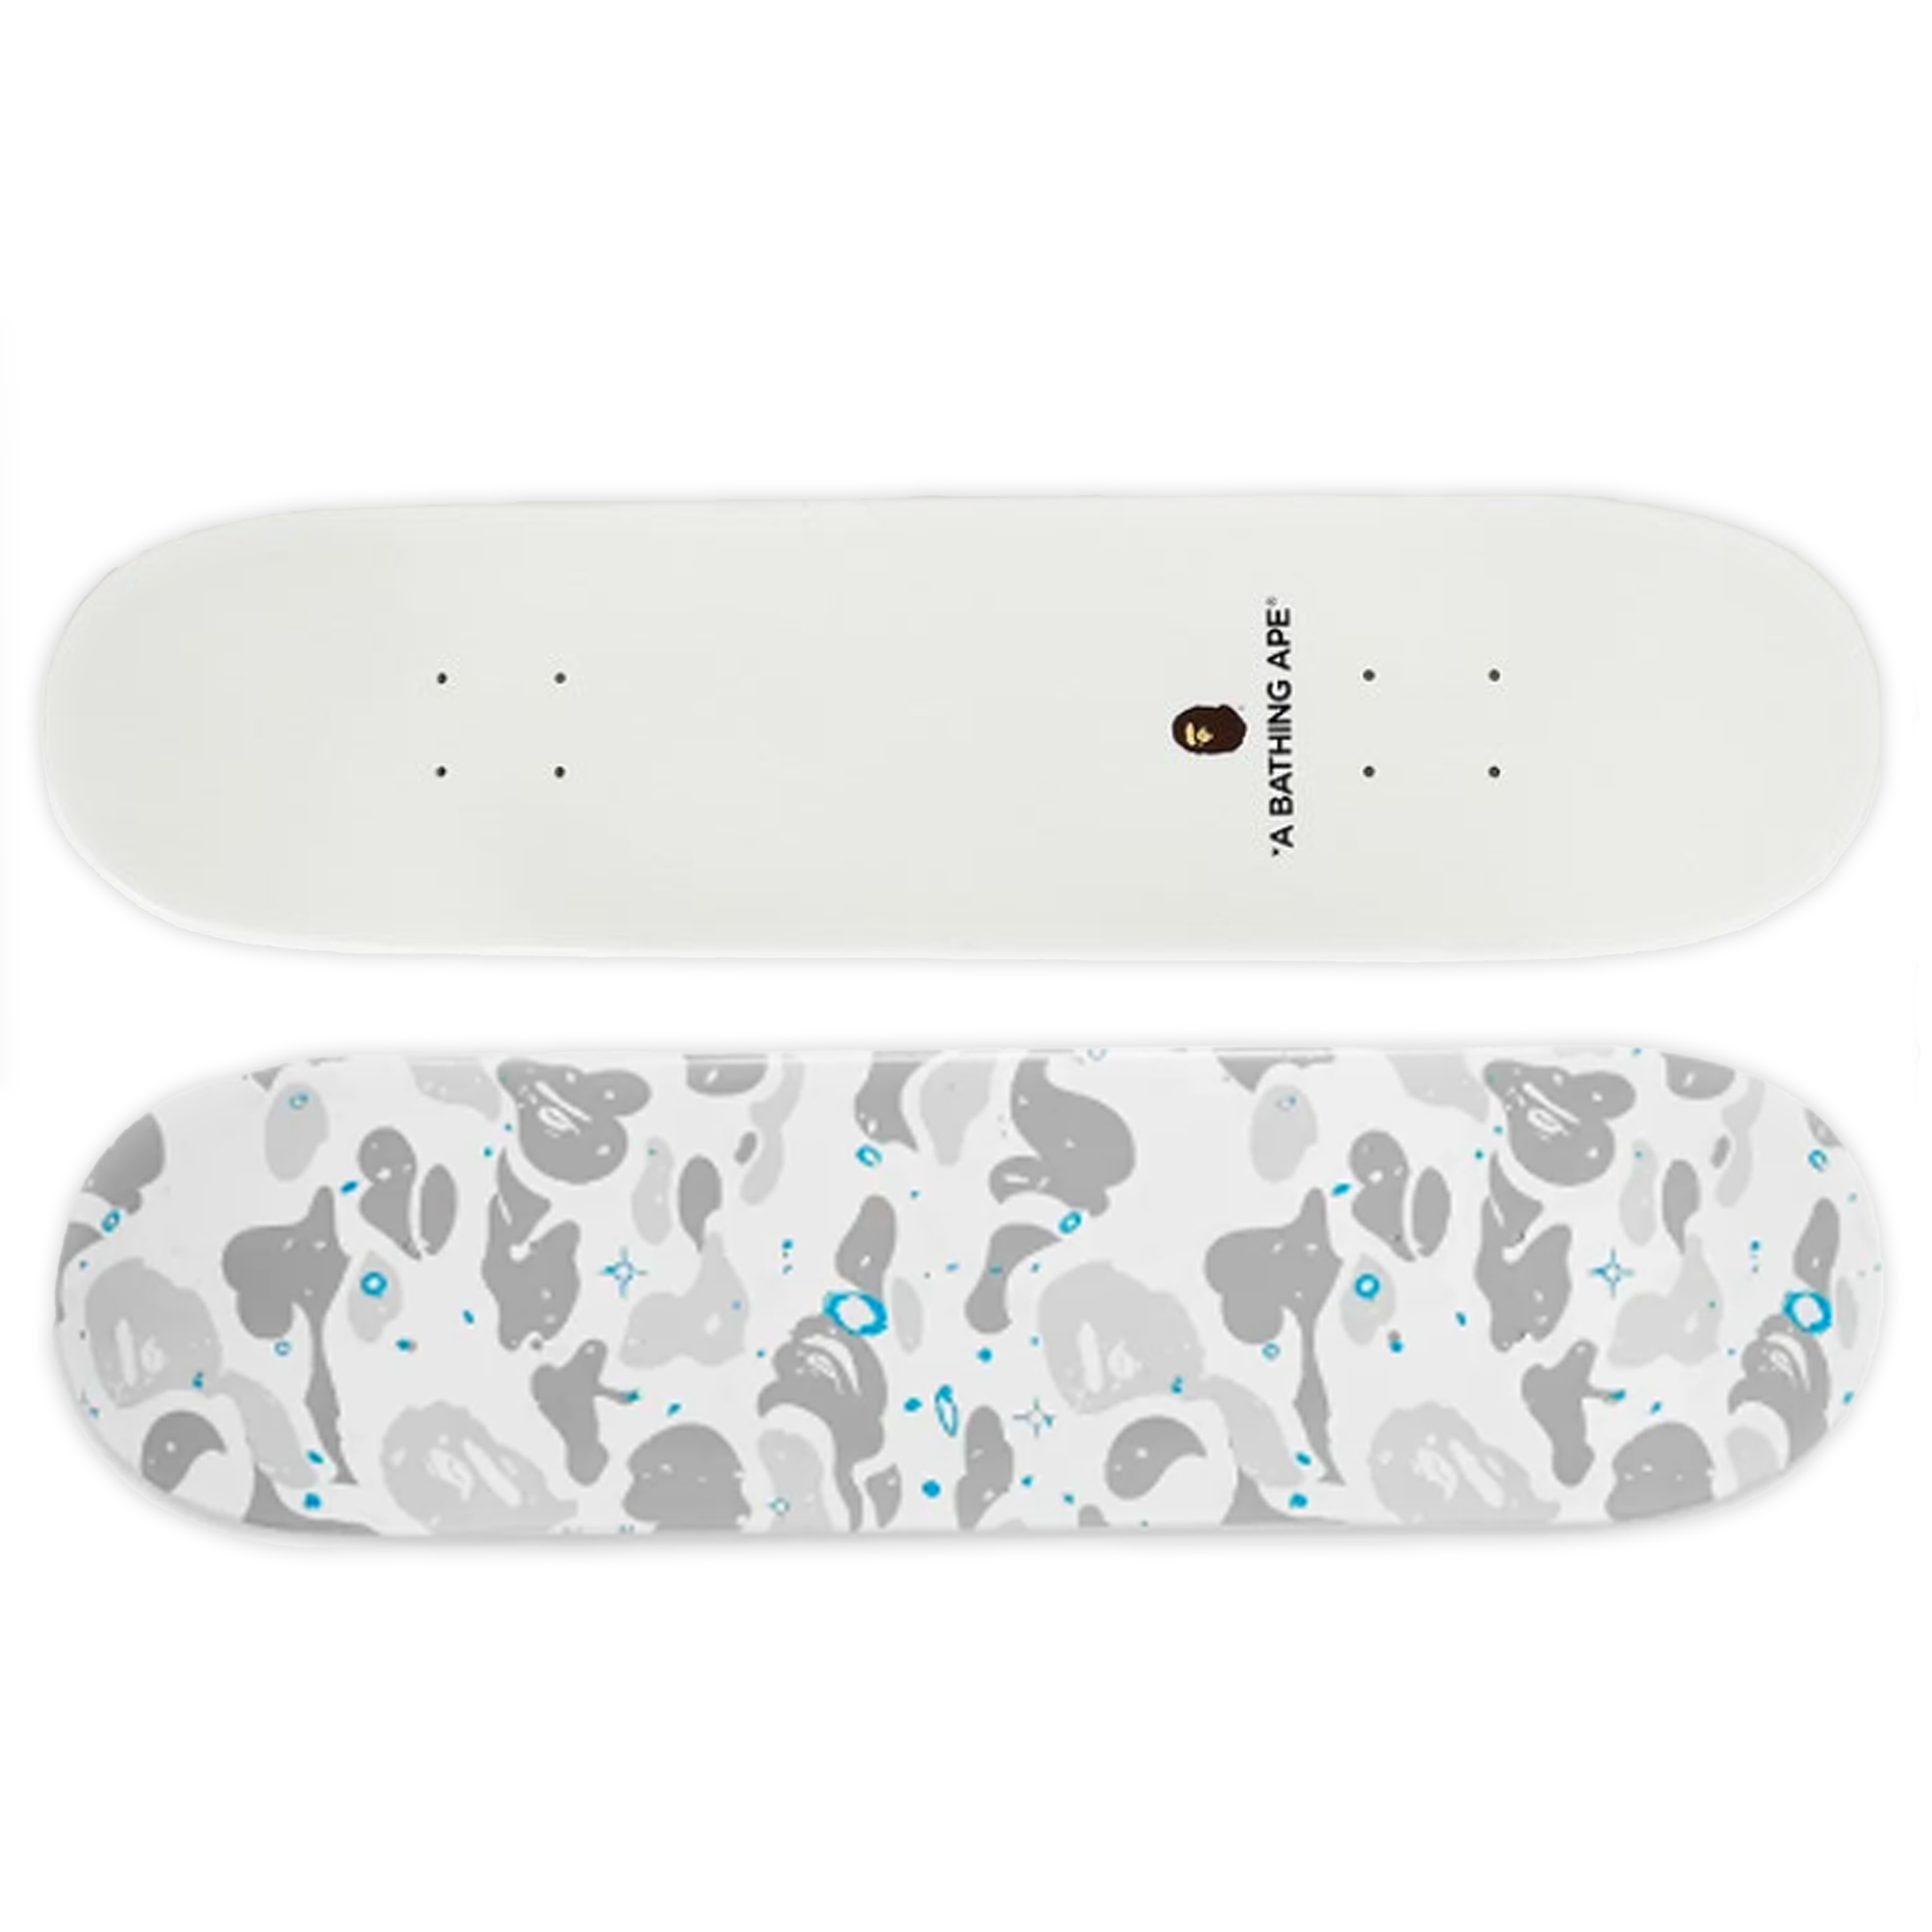 A Bathing Ape "Space Camo" Skateboard